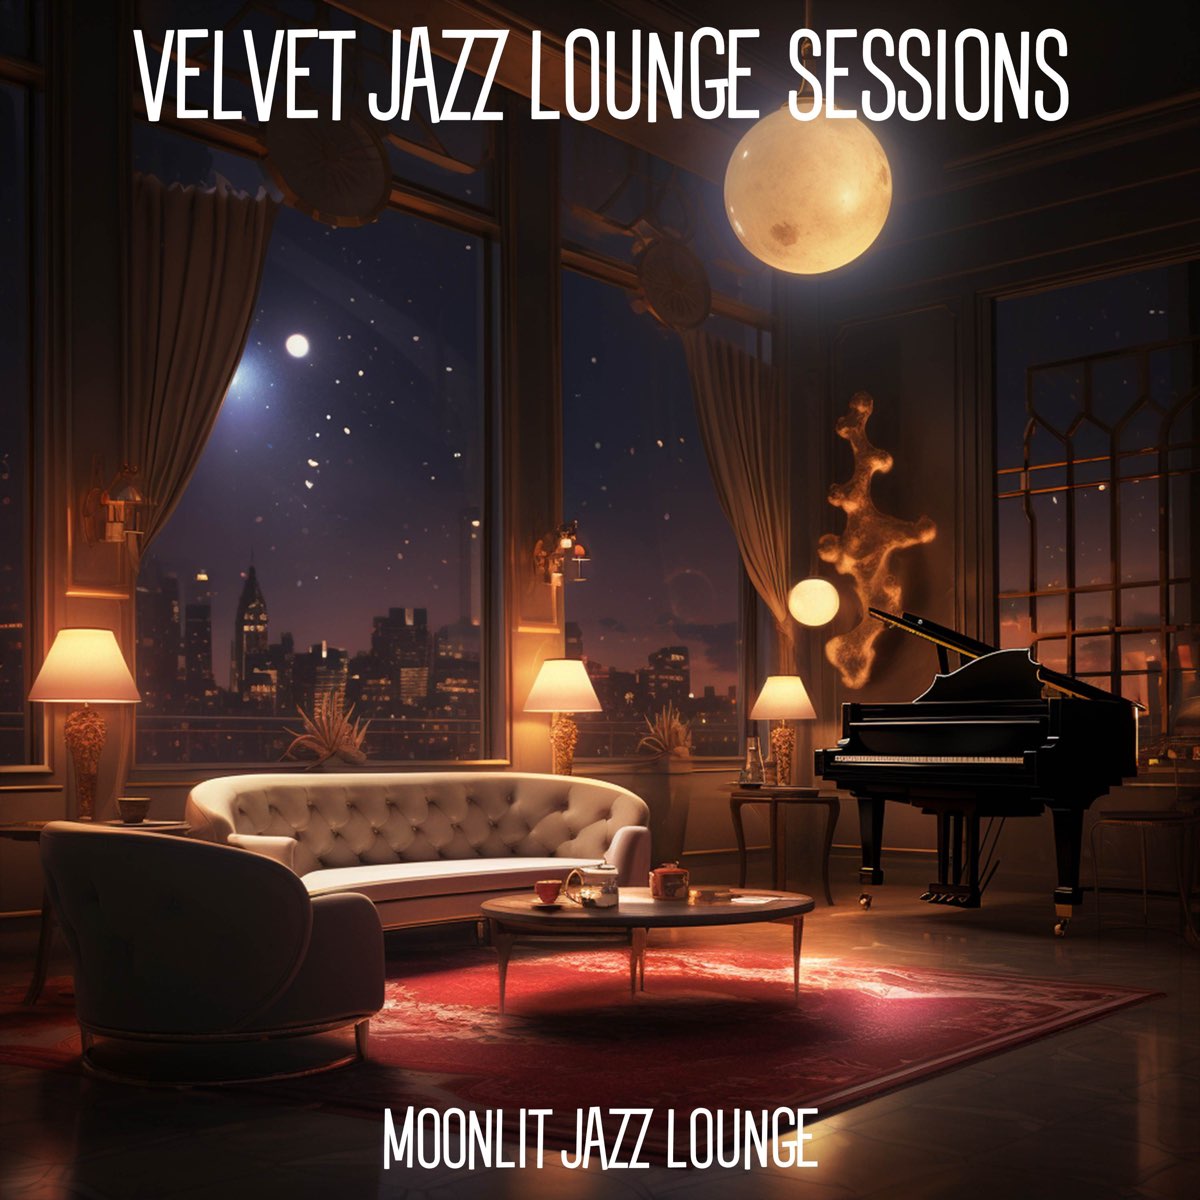 Velvet Jazz Lounge Sessions - Album by Moonlit Jazz Lounge - Apple